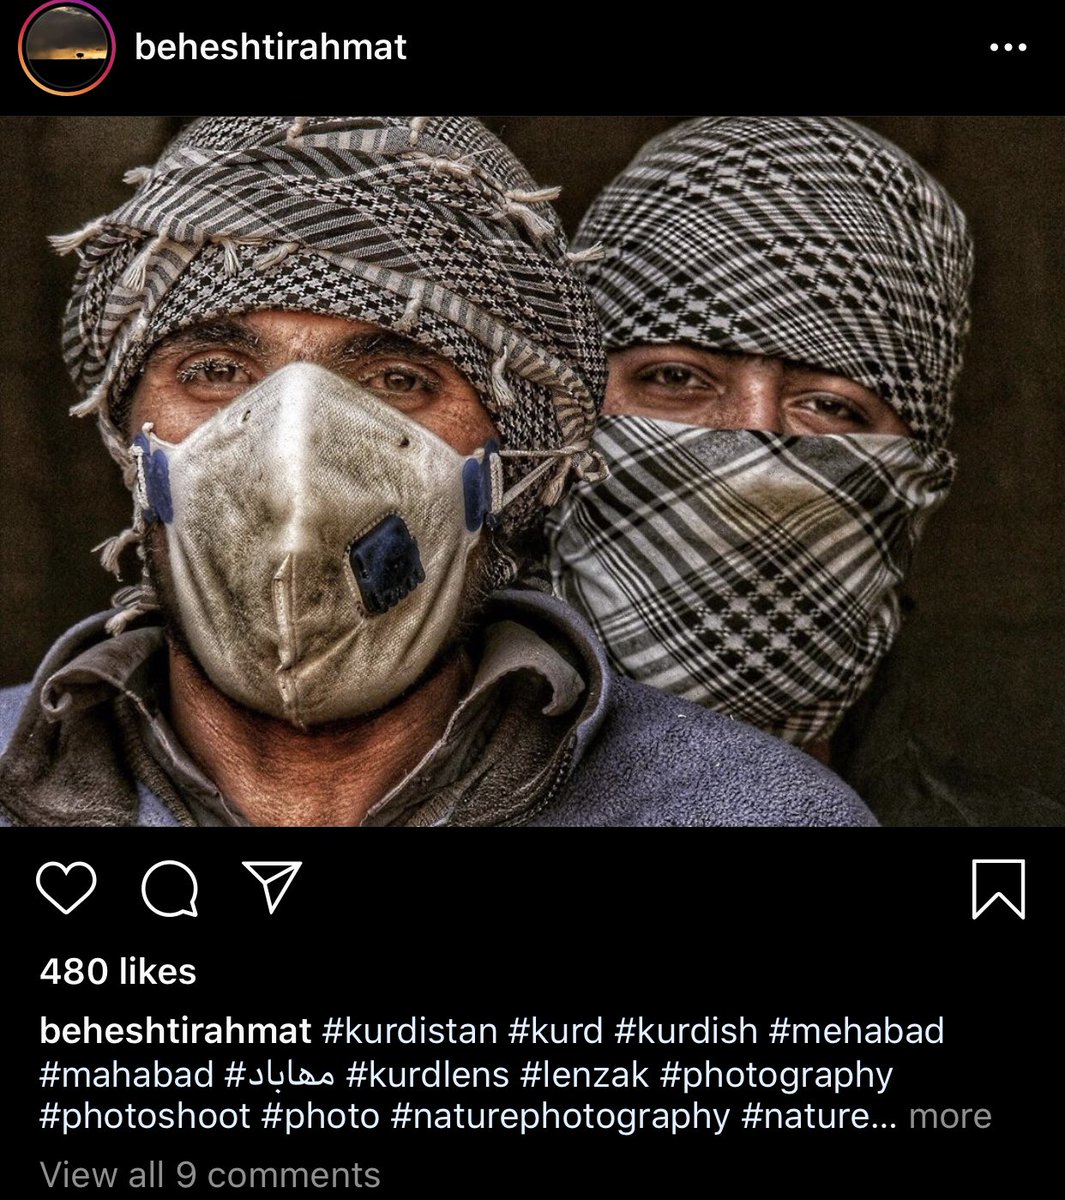 @/beheshtirahmat on instagram. A photographer capturing the daily life of Kurds.